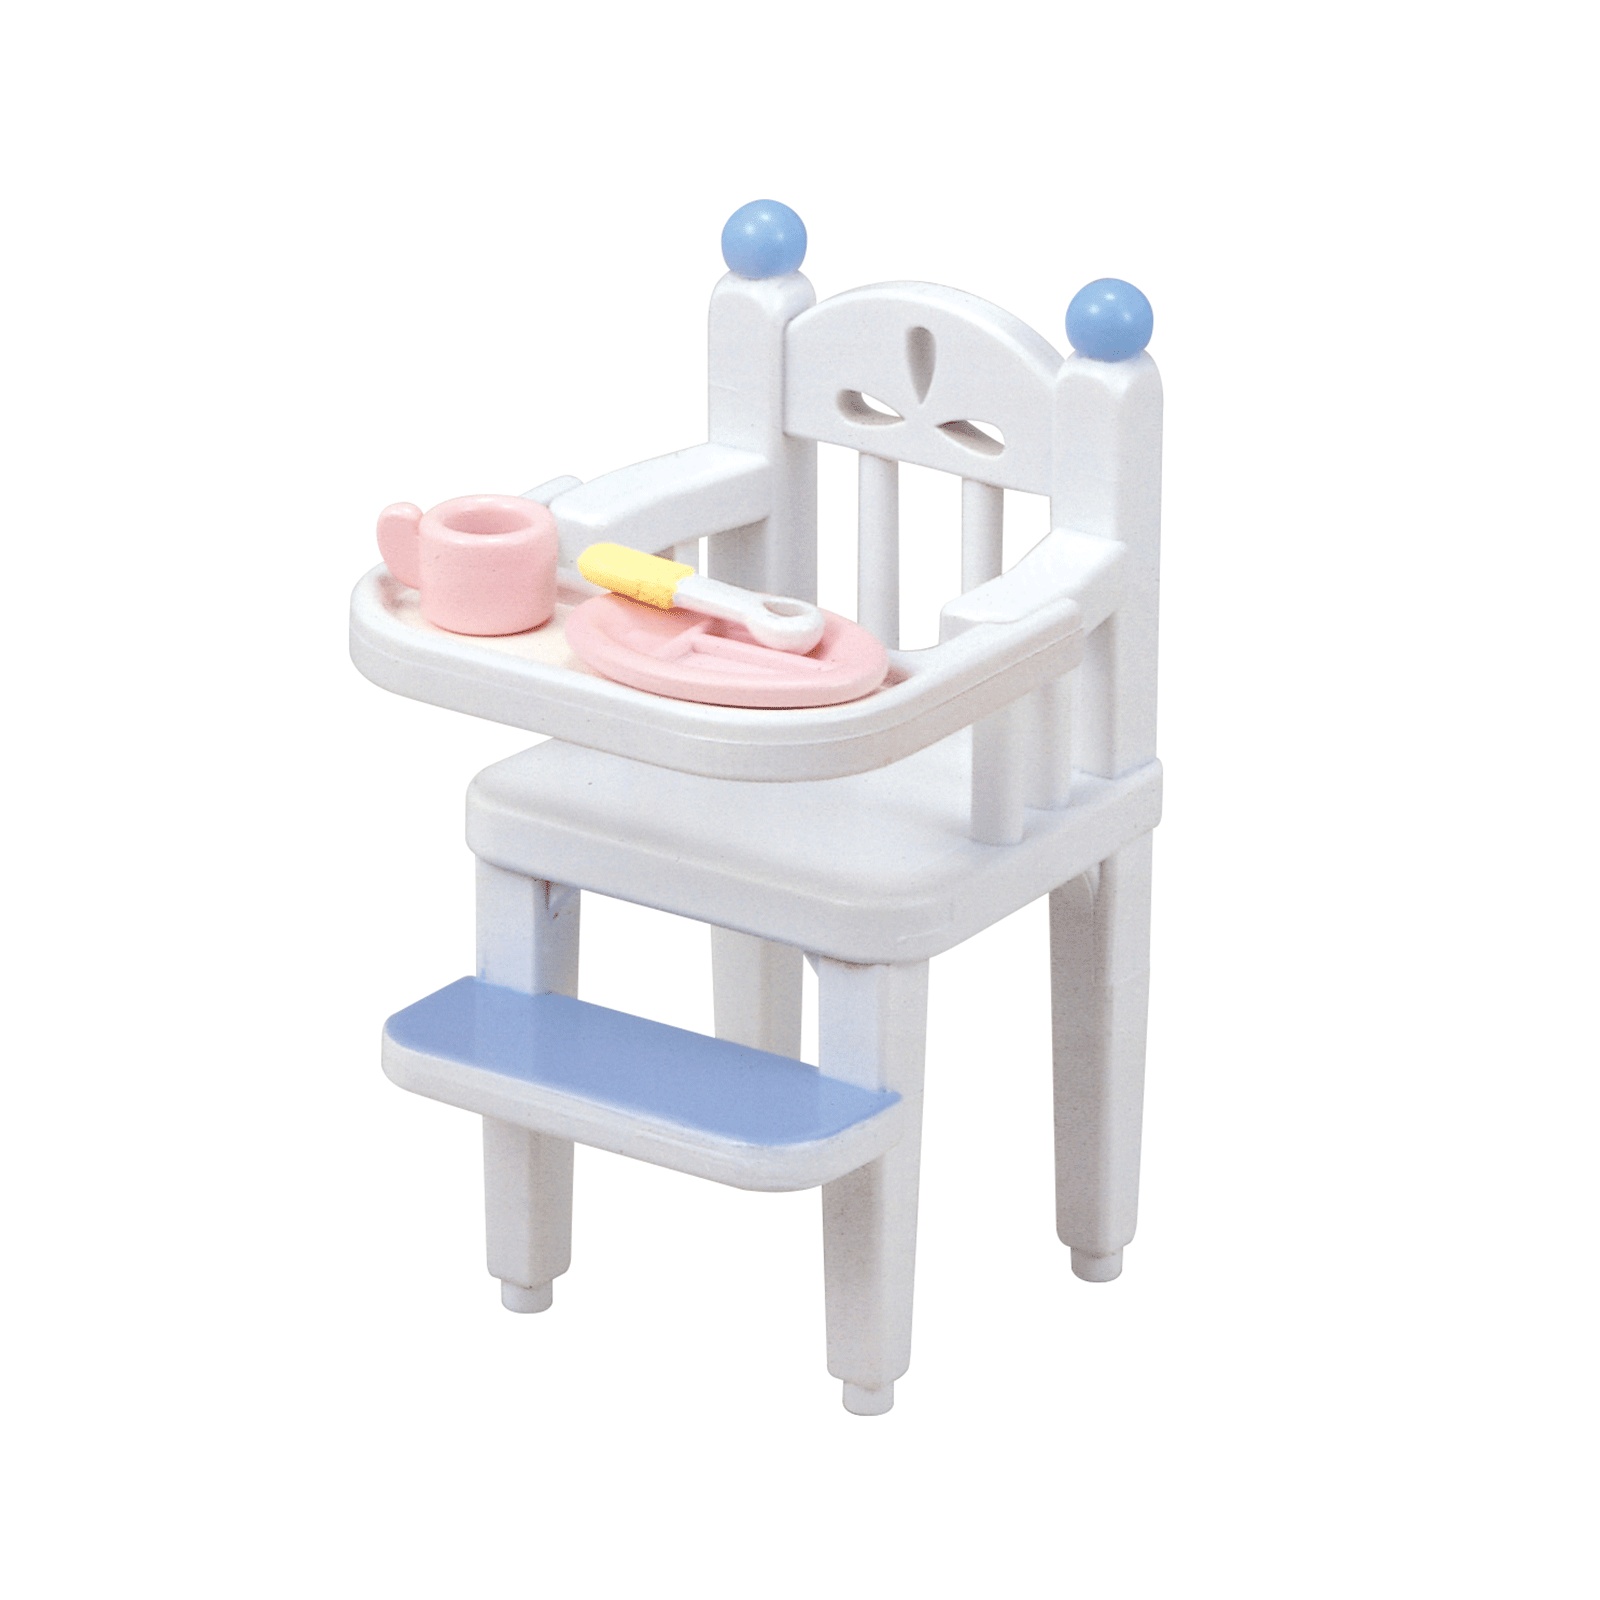 sylvanian families baby high chair